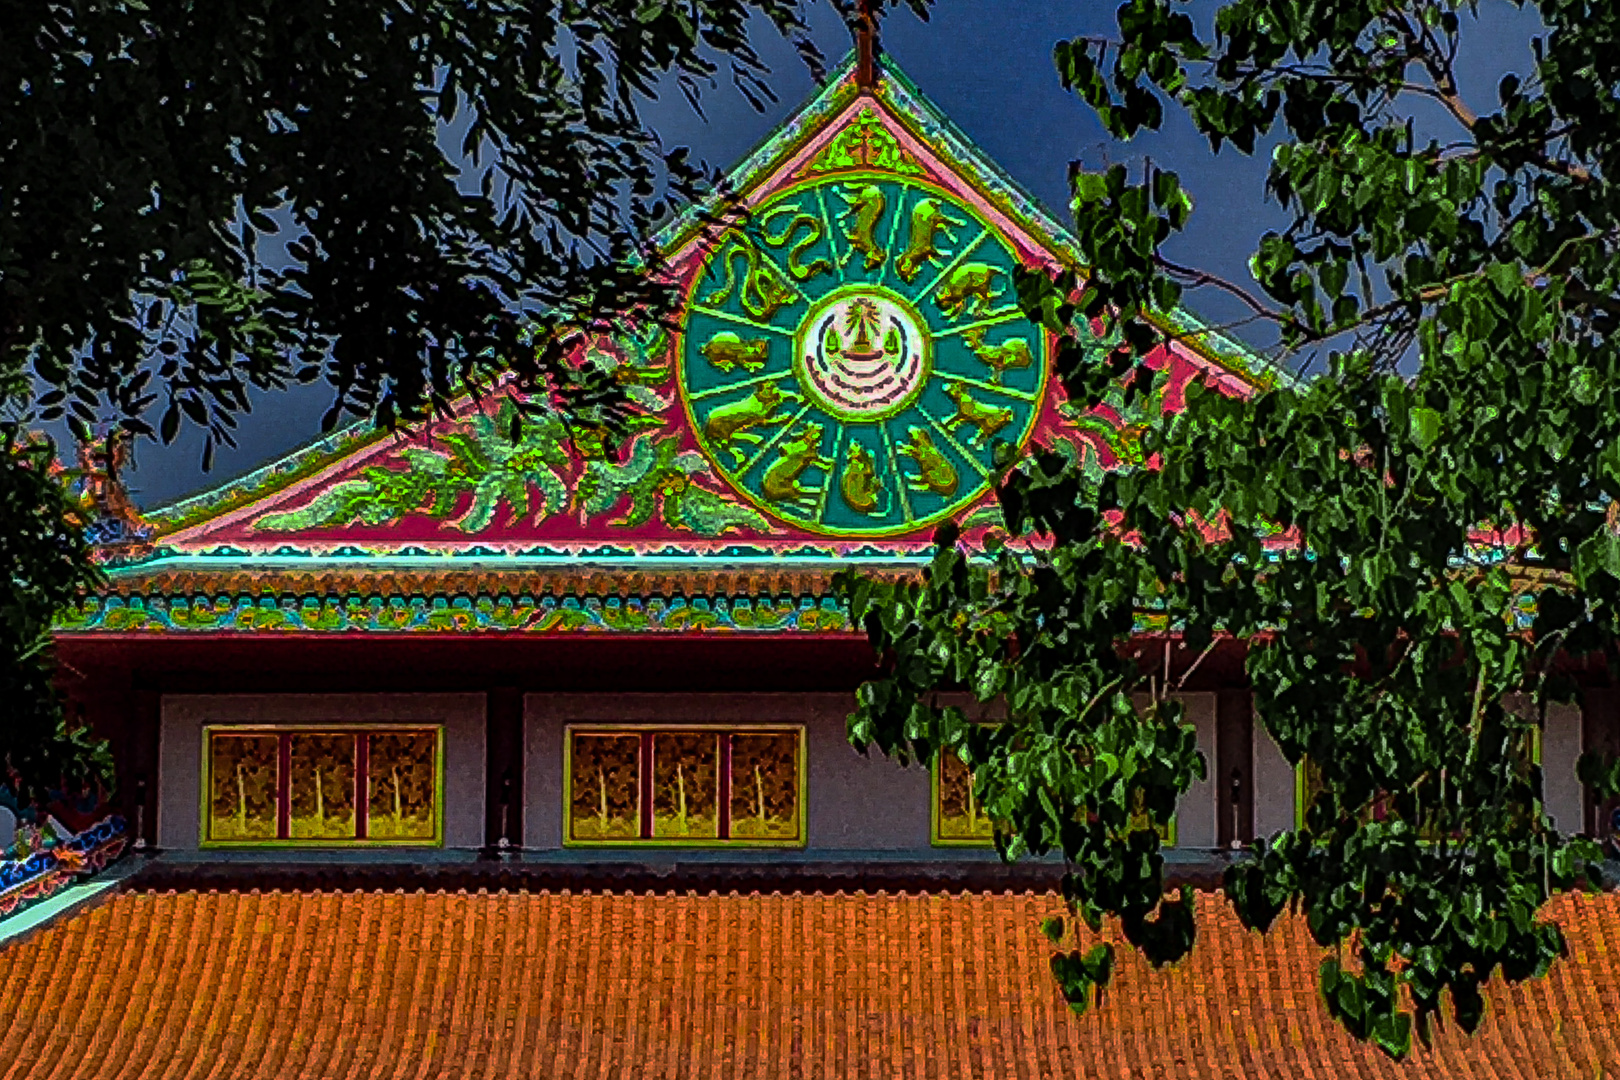 Gable end of the Wat Thaworn Wararam